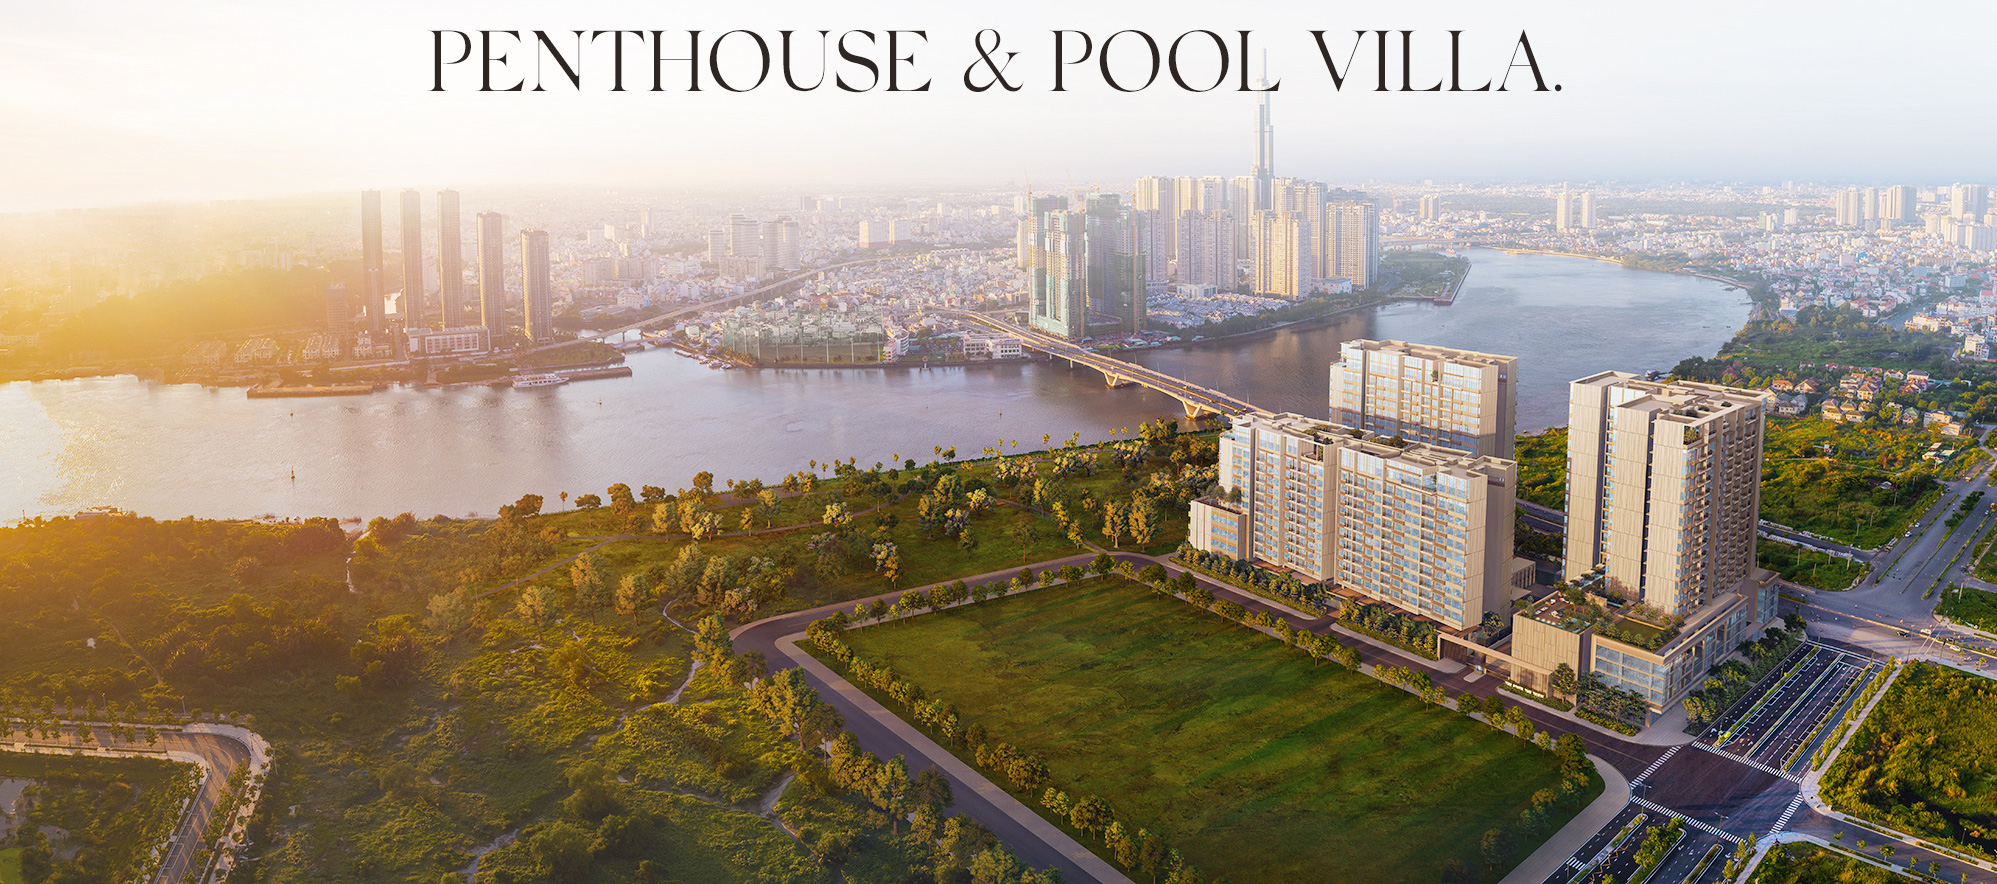 Penthouse & Pool Villa The River Thu Thiem